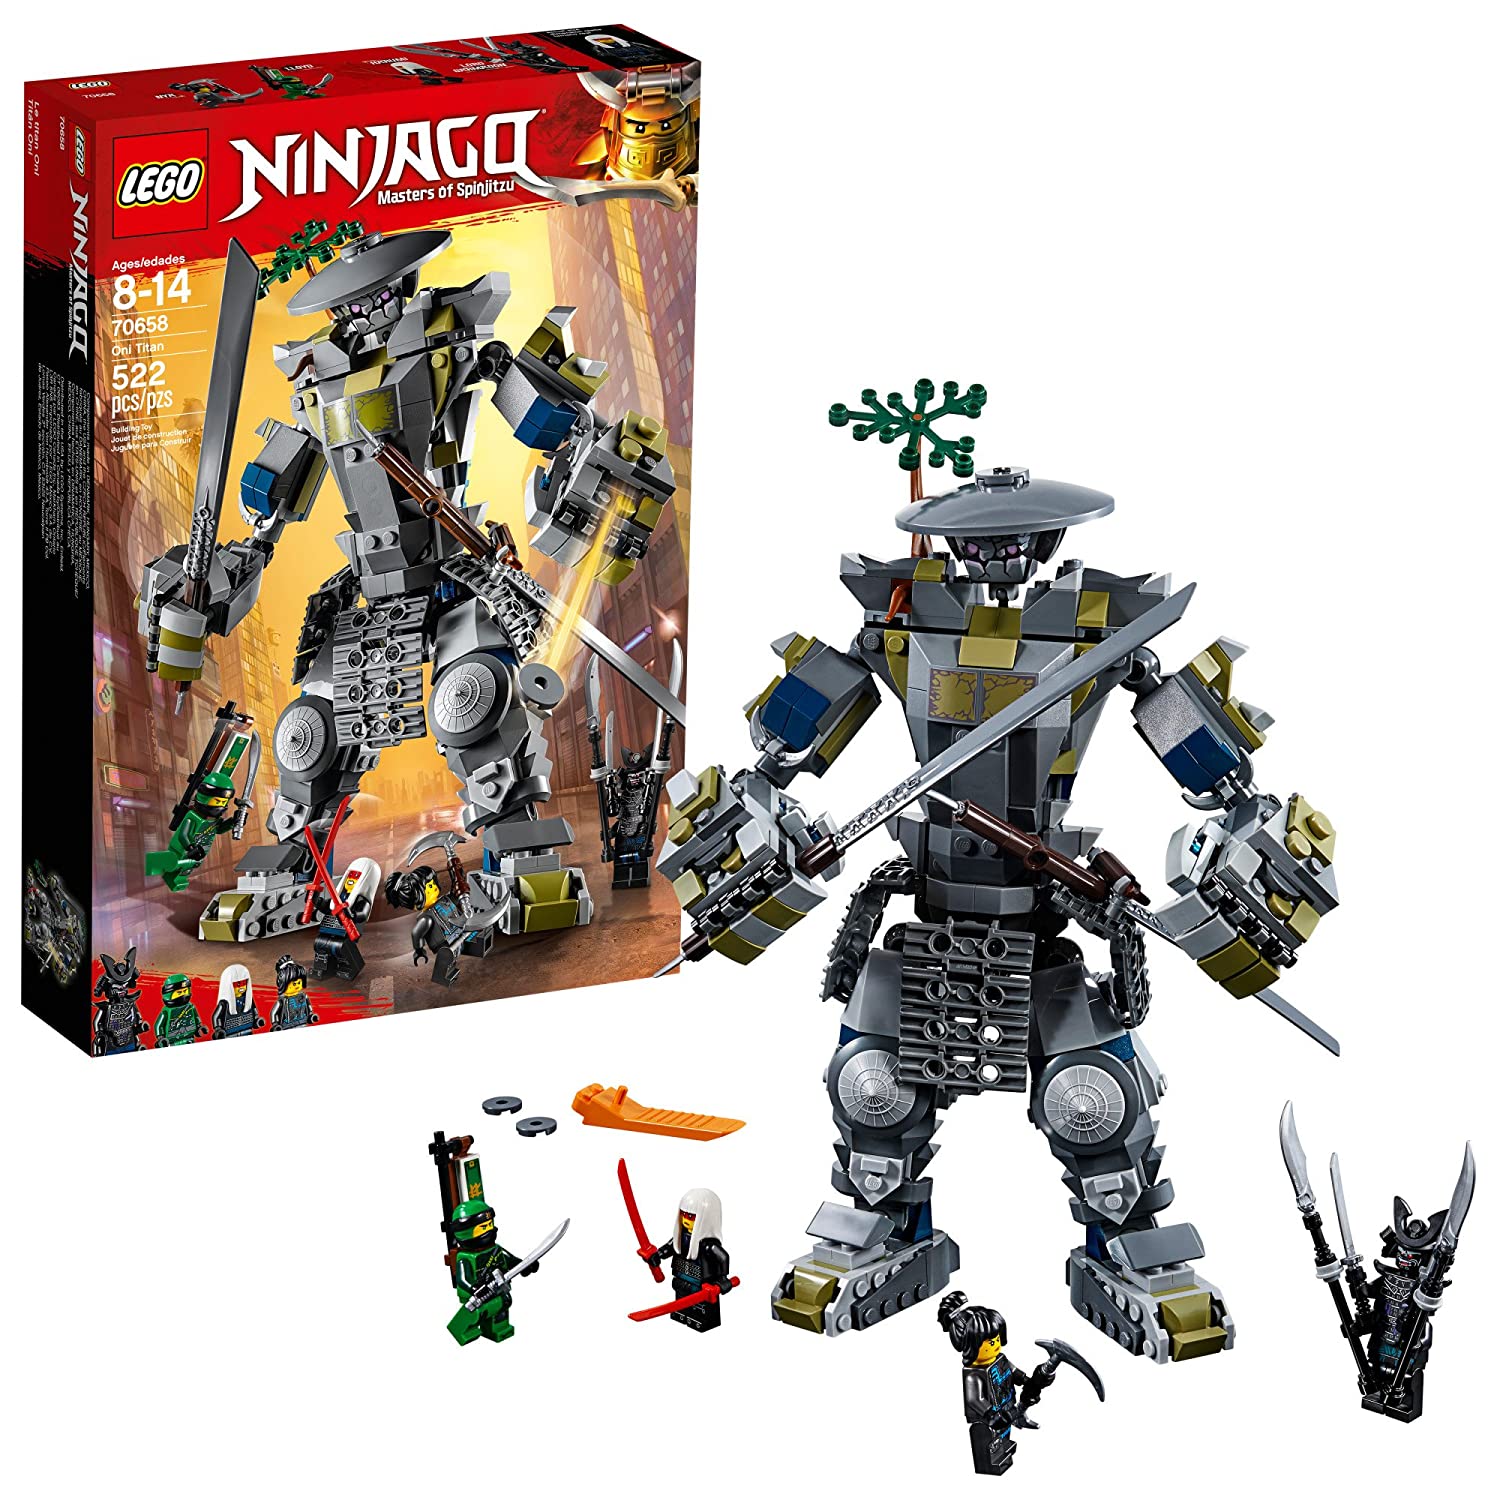 LEGO NINJAGO Masters of Spinjitzu: Oni Titan 70658 Building Kit (522 Piece)